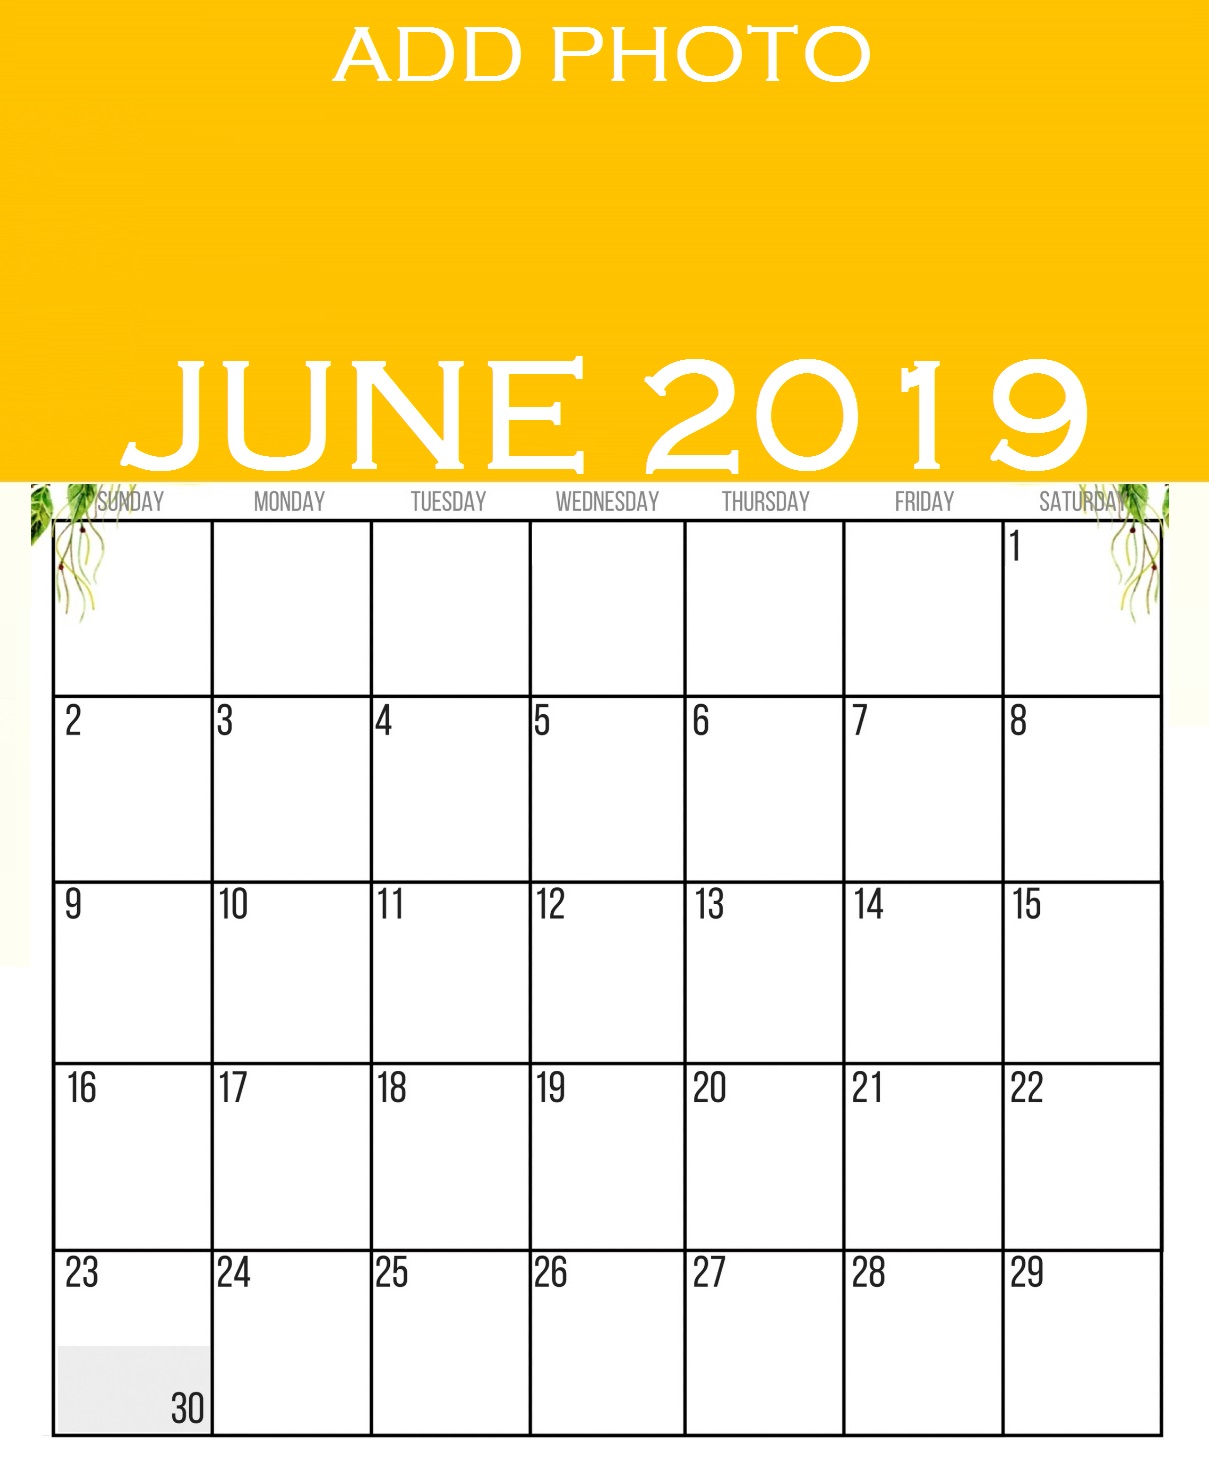 June 2019 Wall Calendar